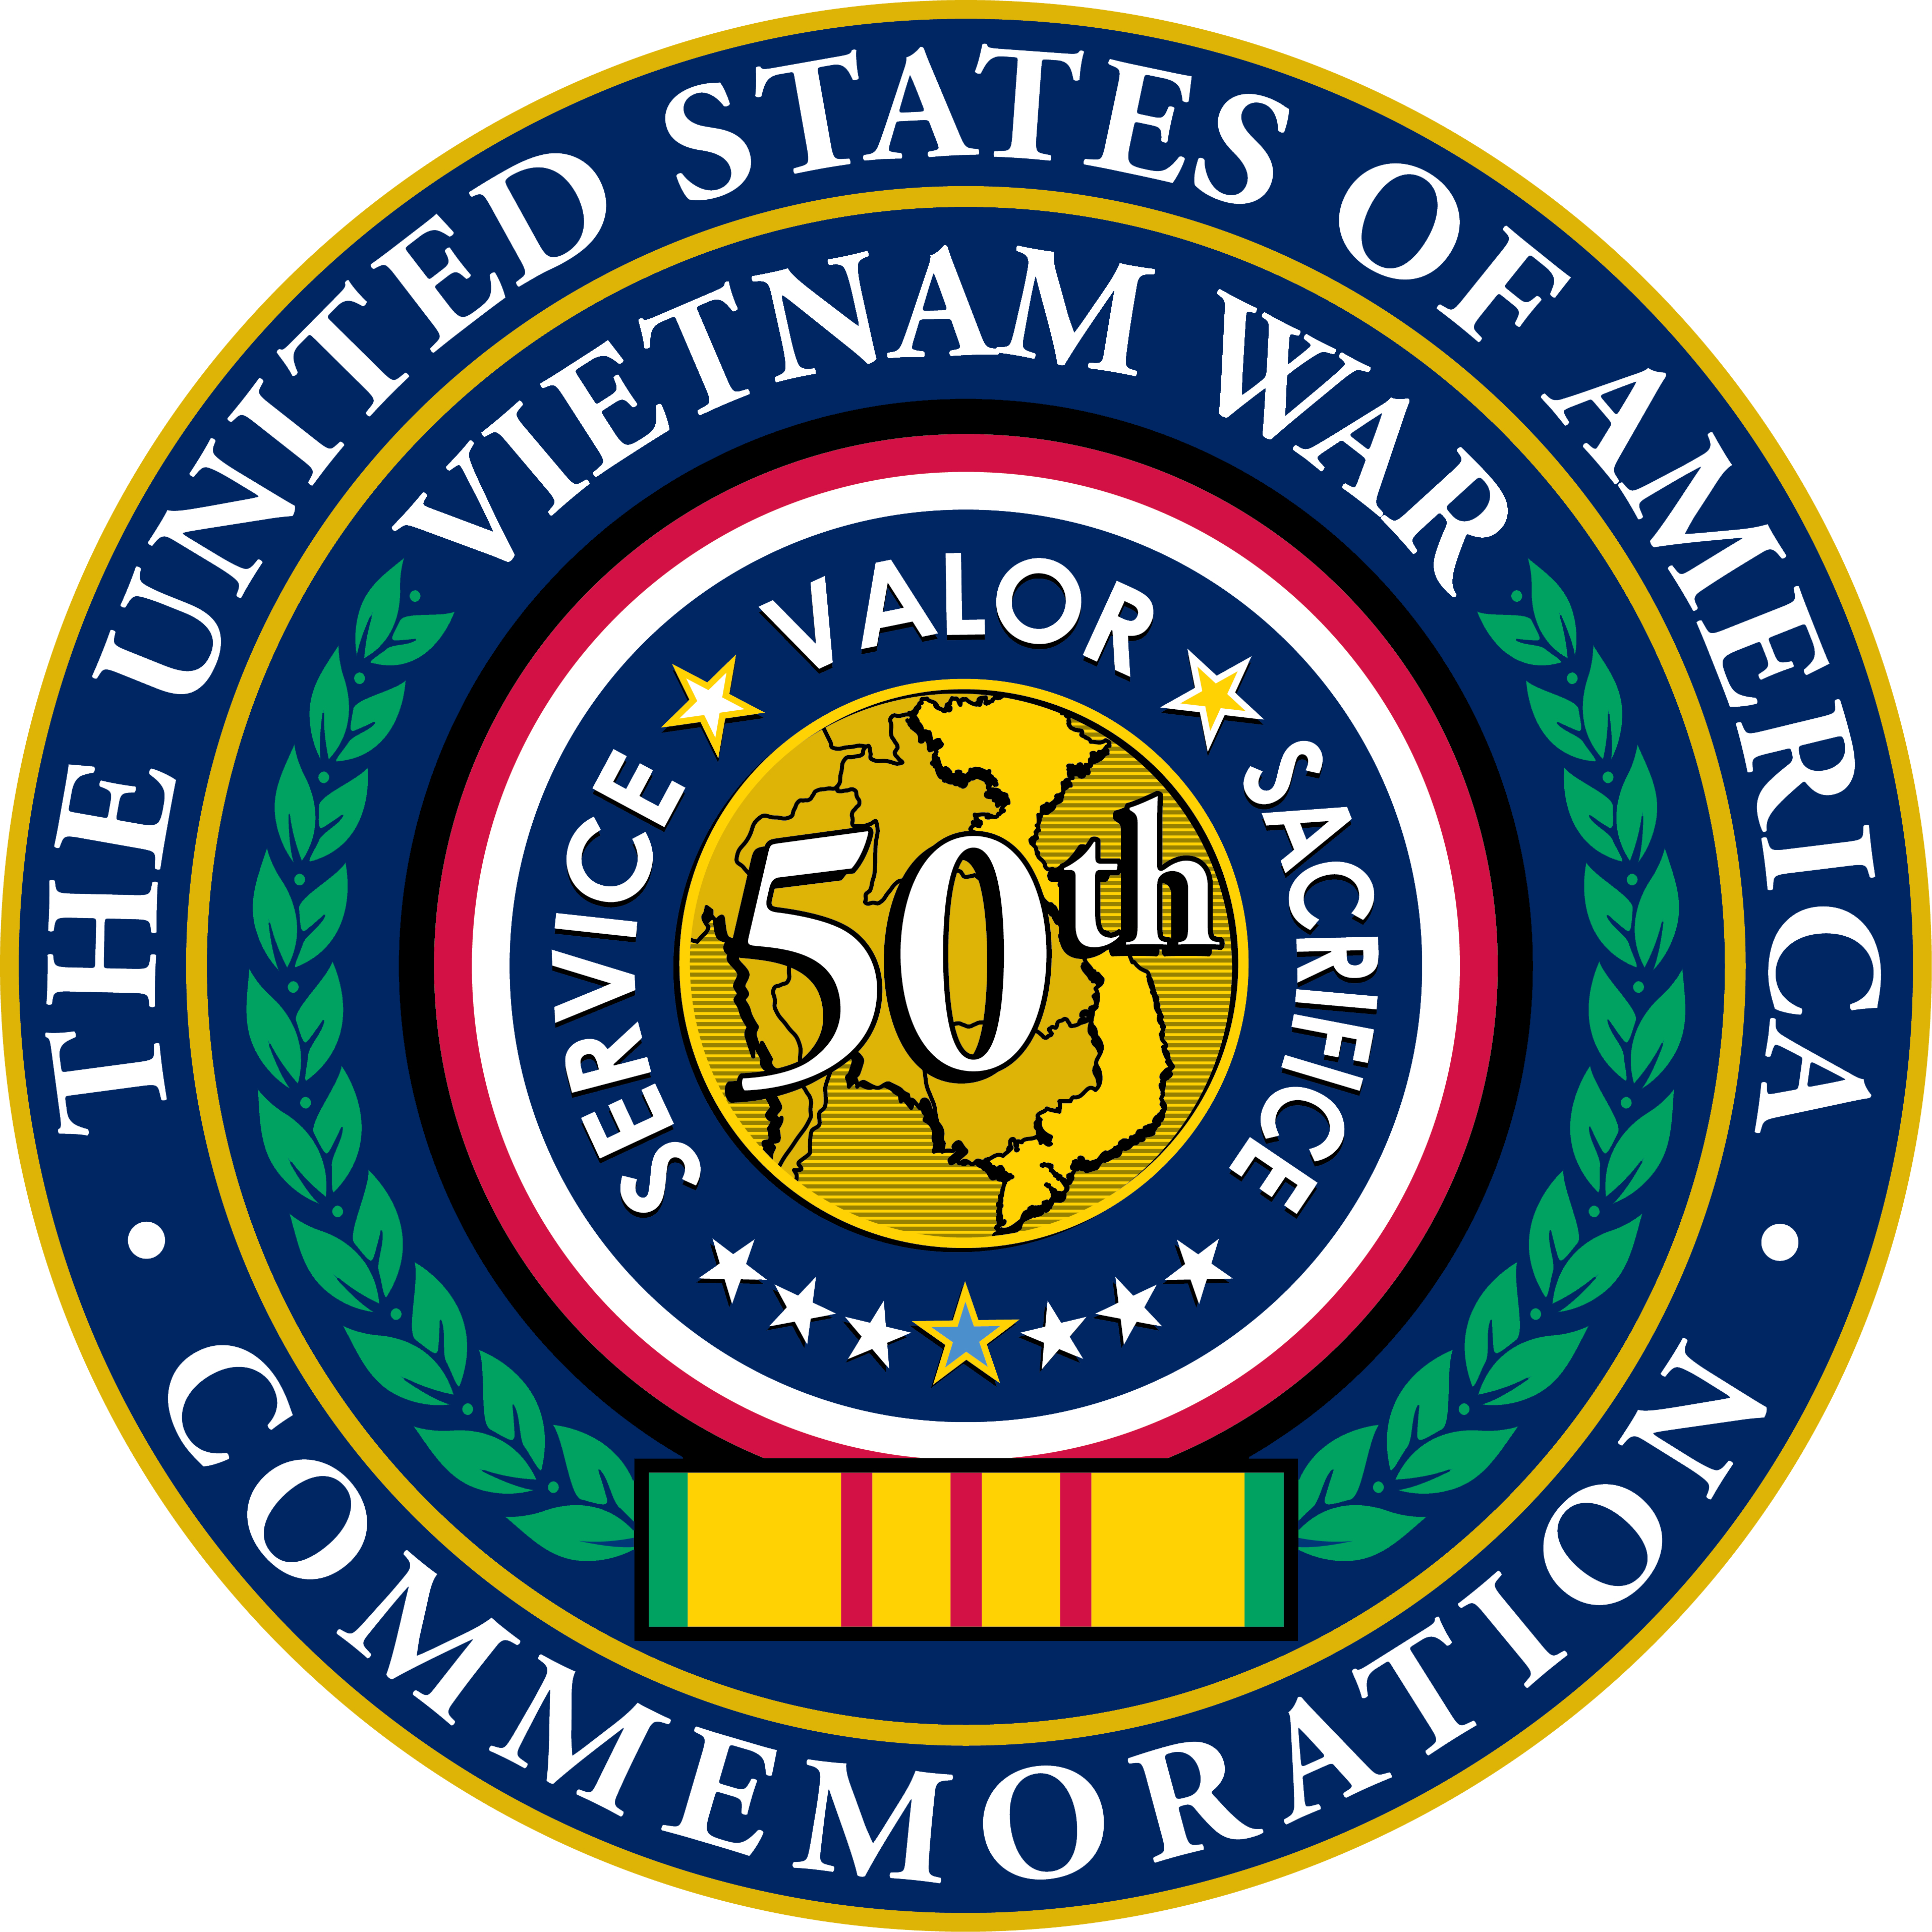 The Vietnam War Commemoration